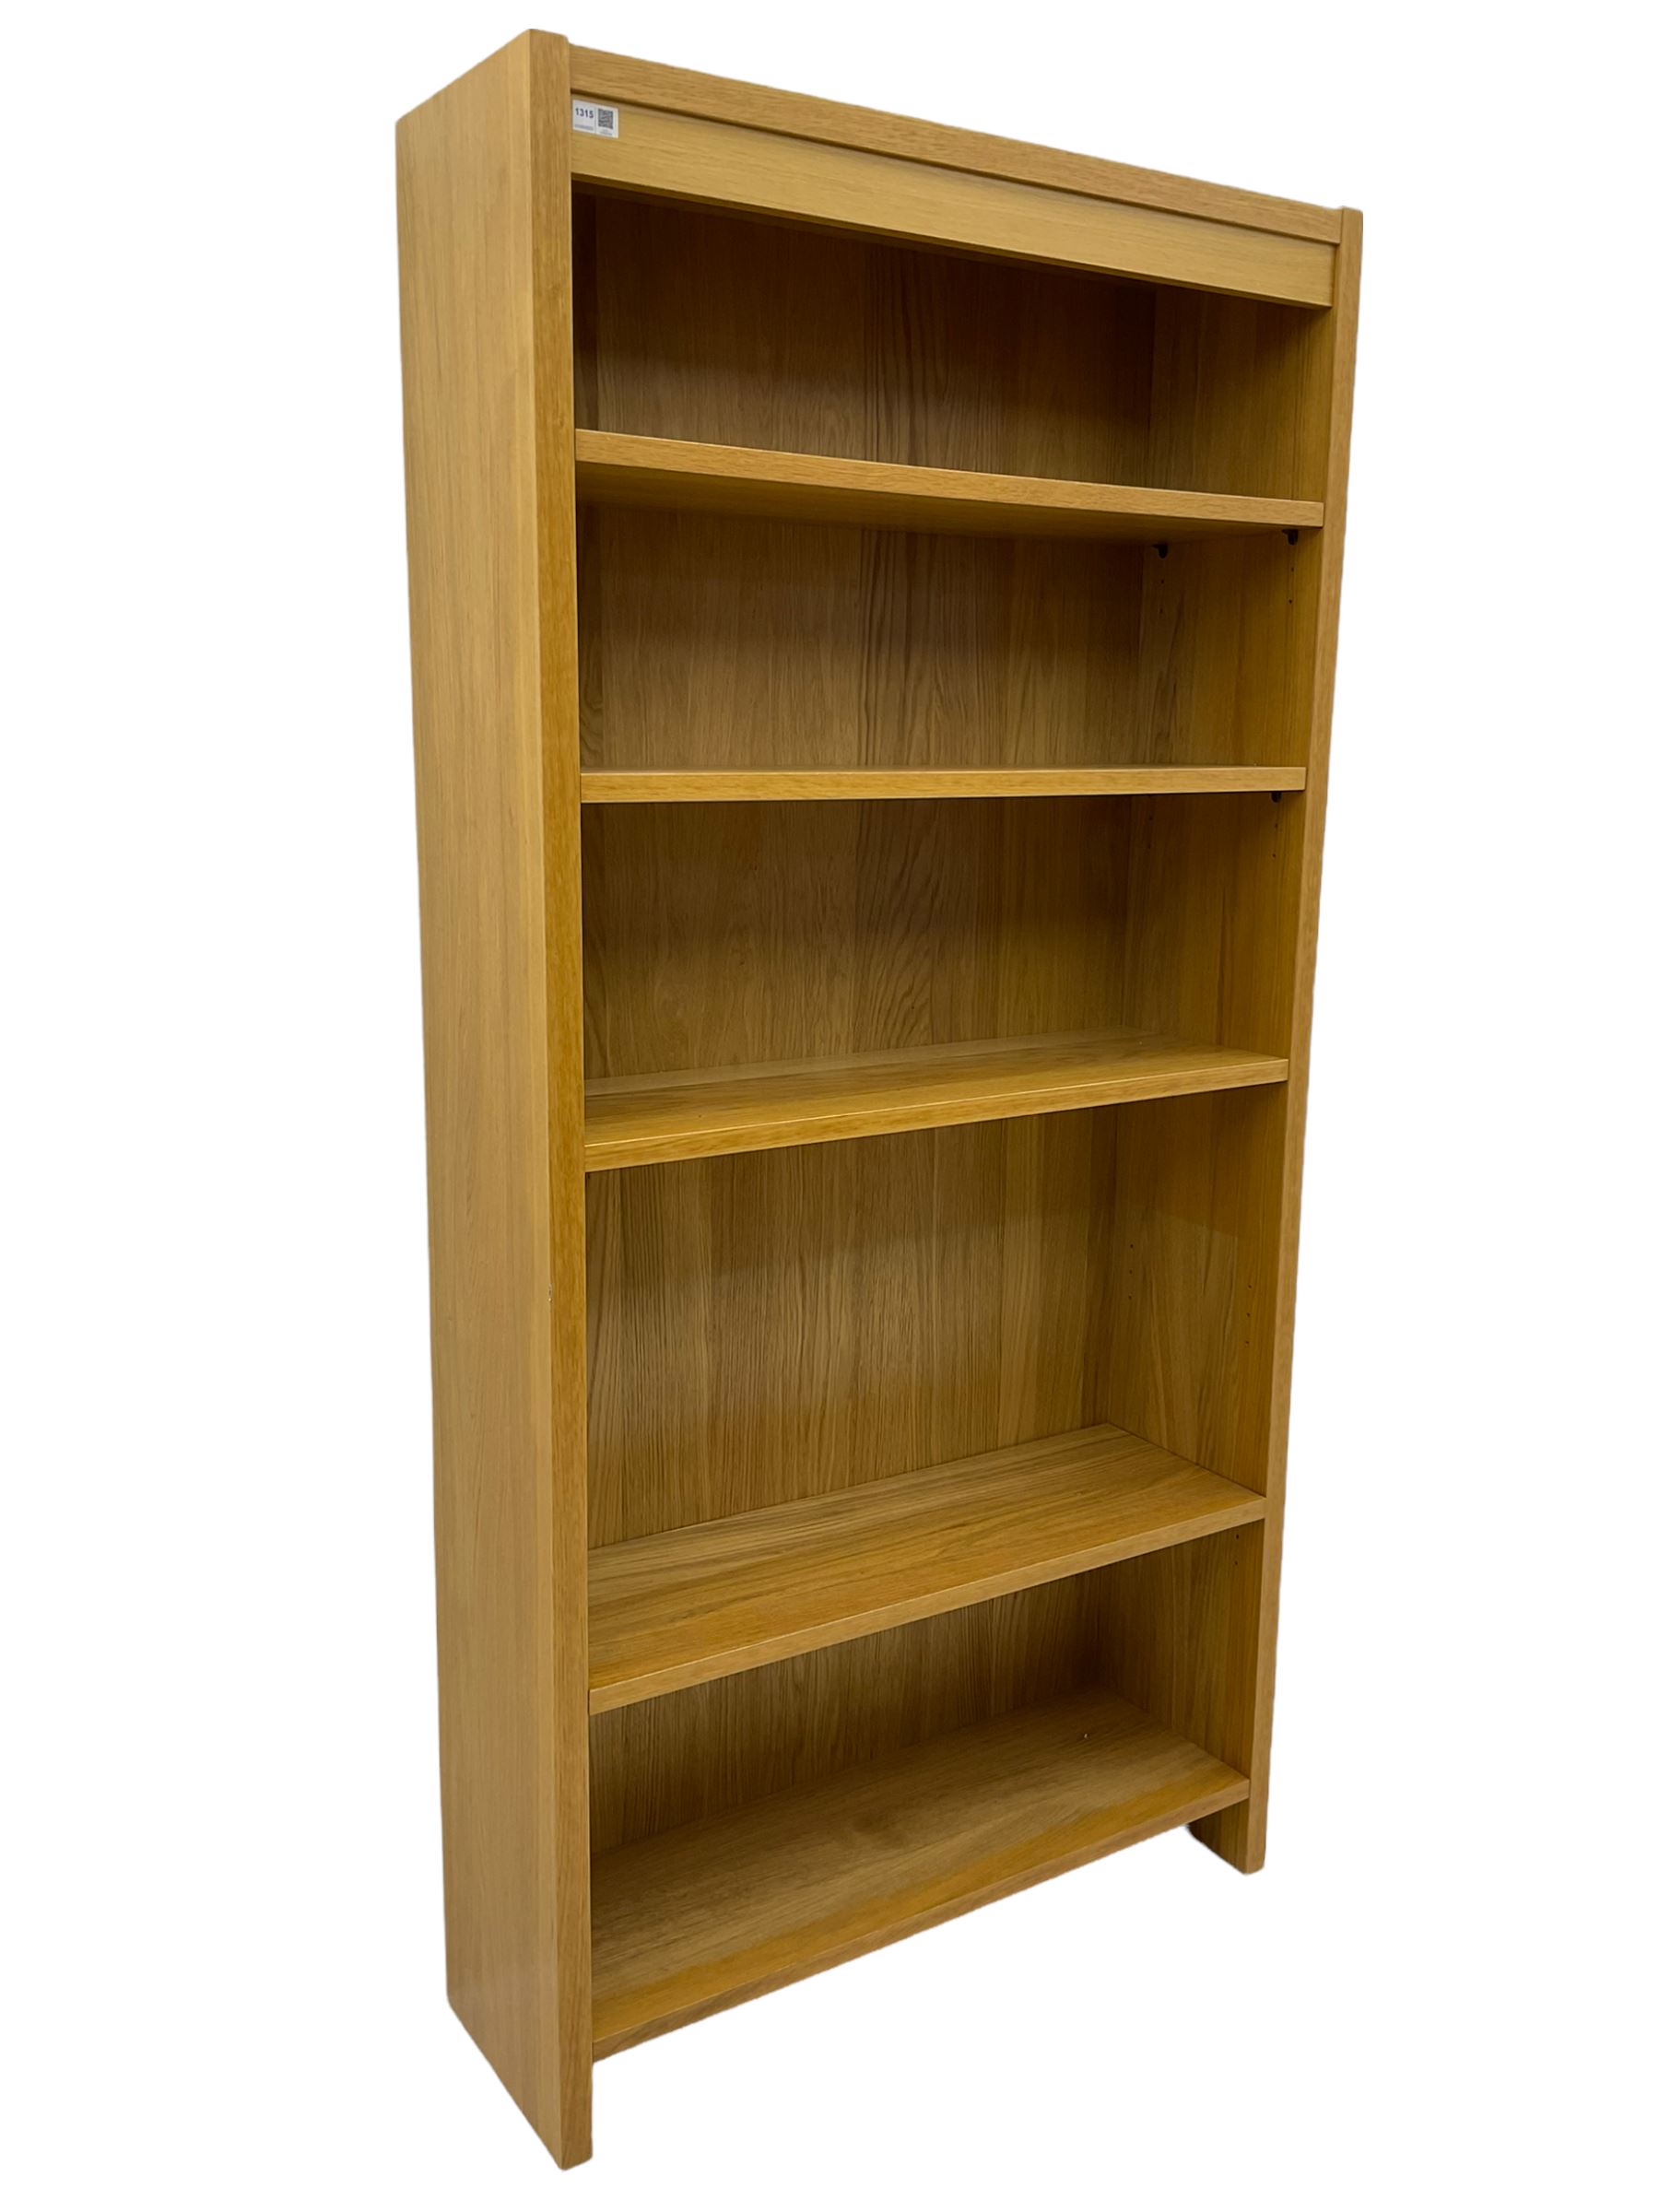 Light oak open bookcase - Image 2 of 4